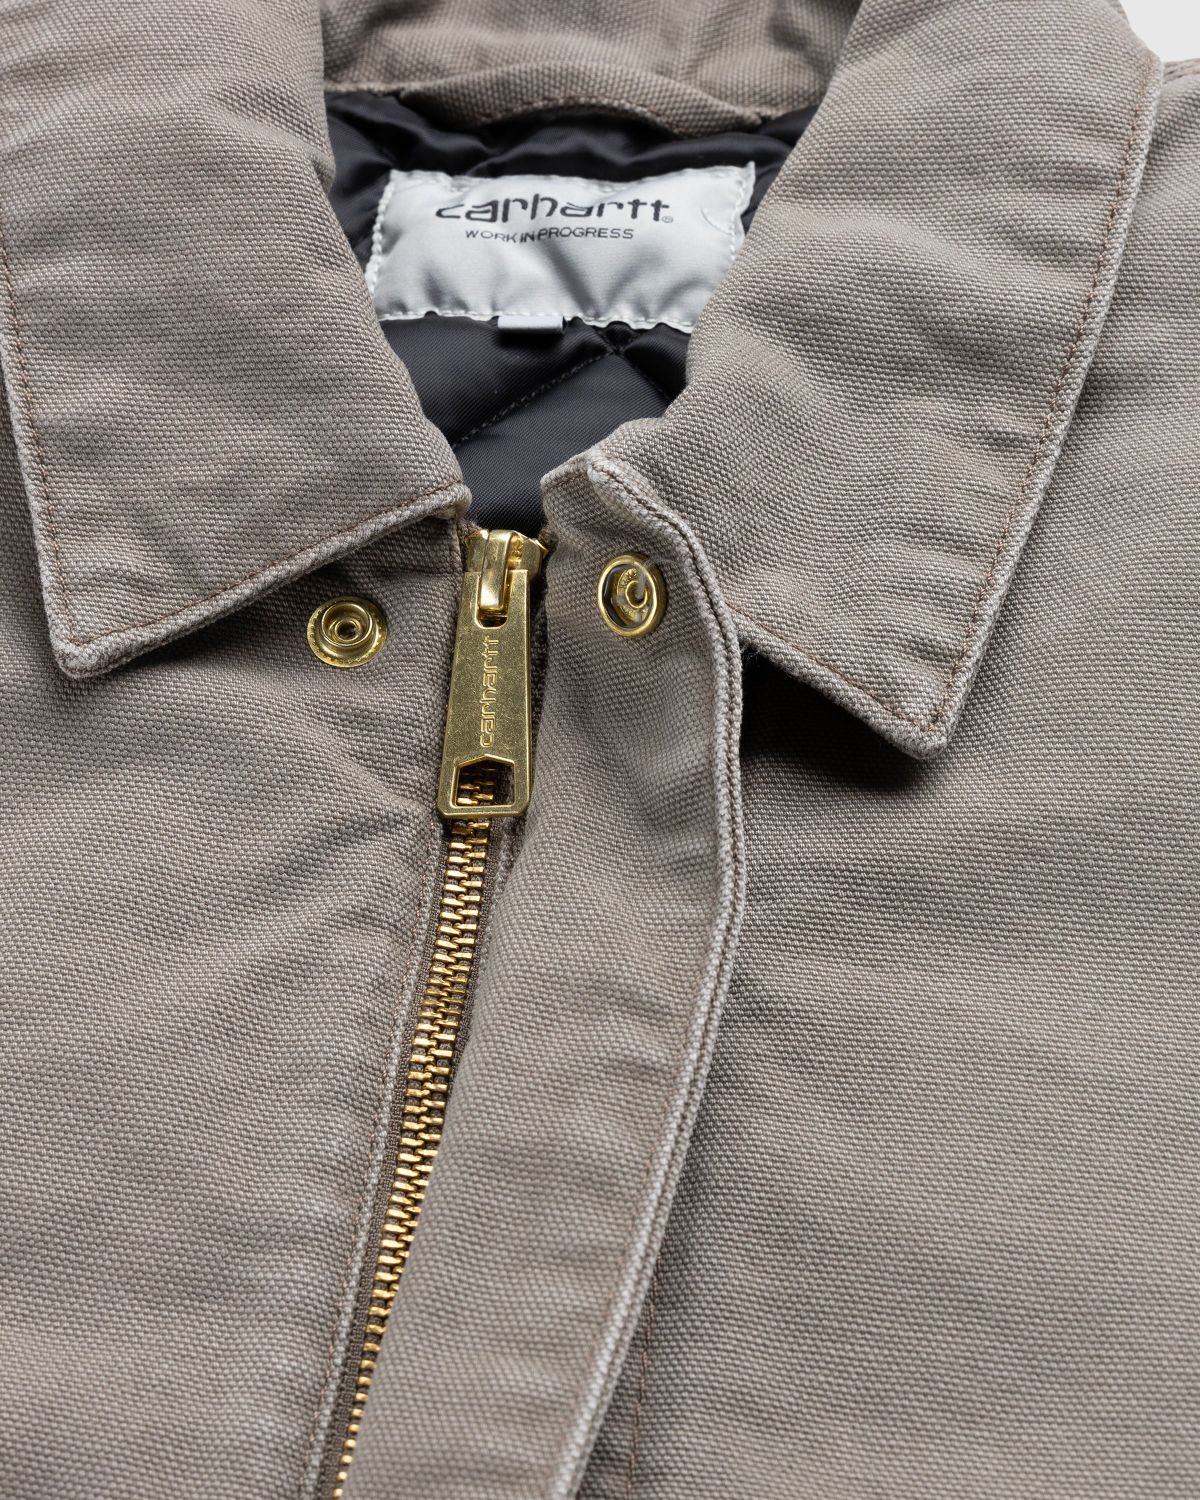 Carhartt WIP – OG Arcan Jacket Barista/Aged Canvas - Outerwear - Multi - Image 5